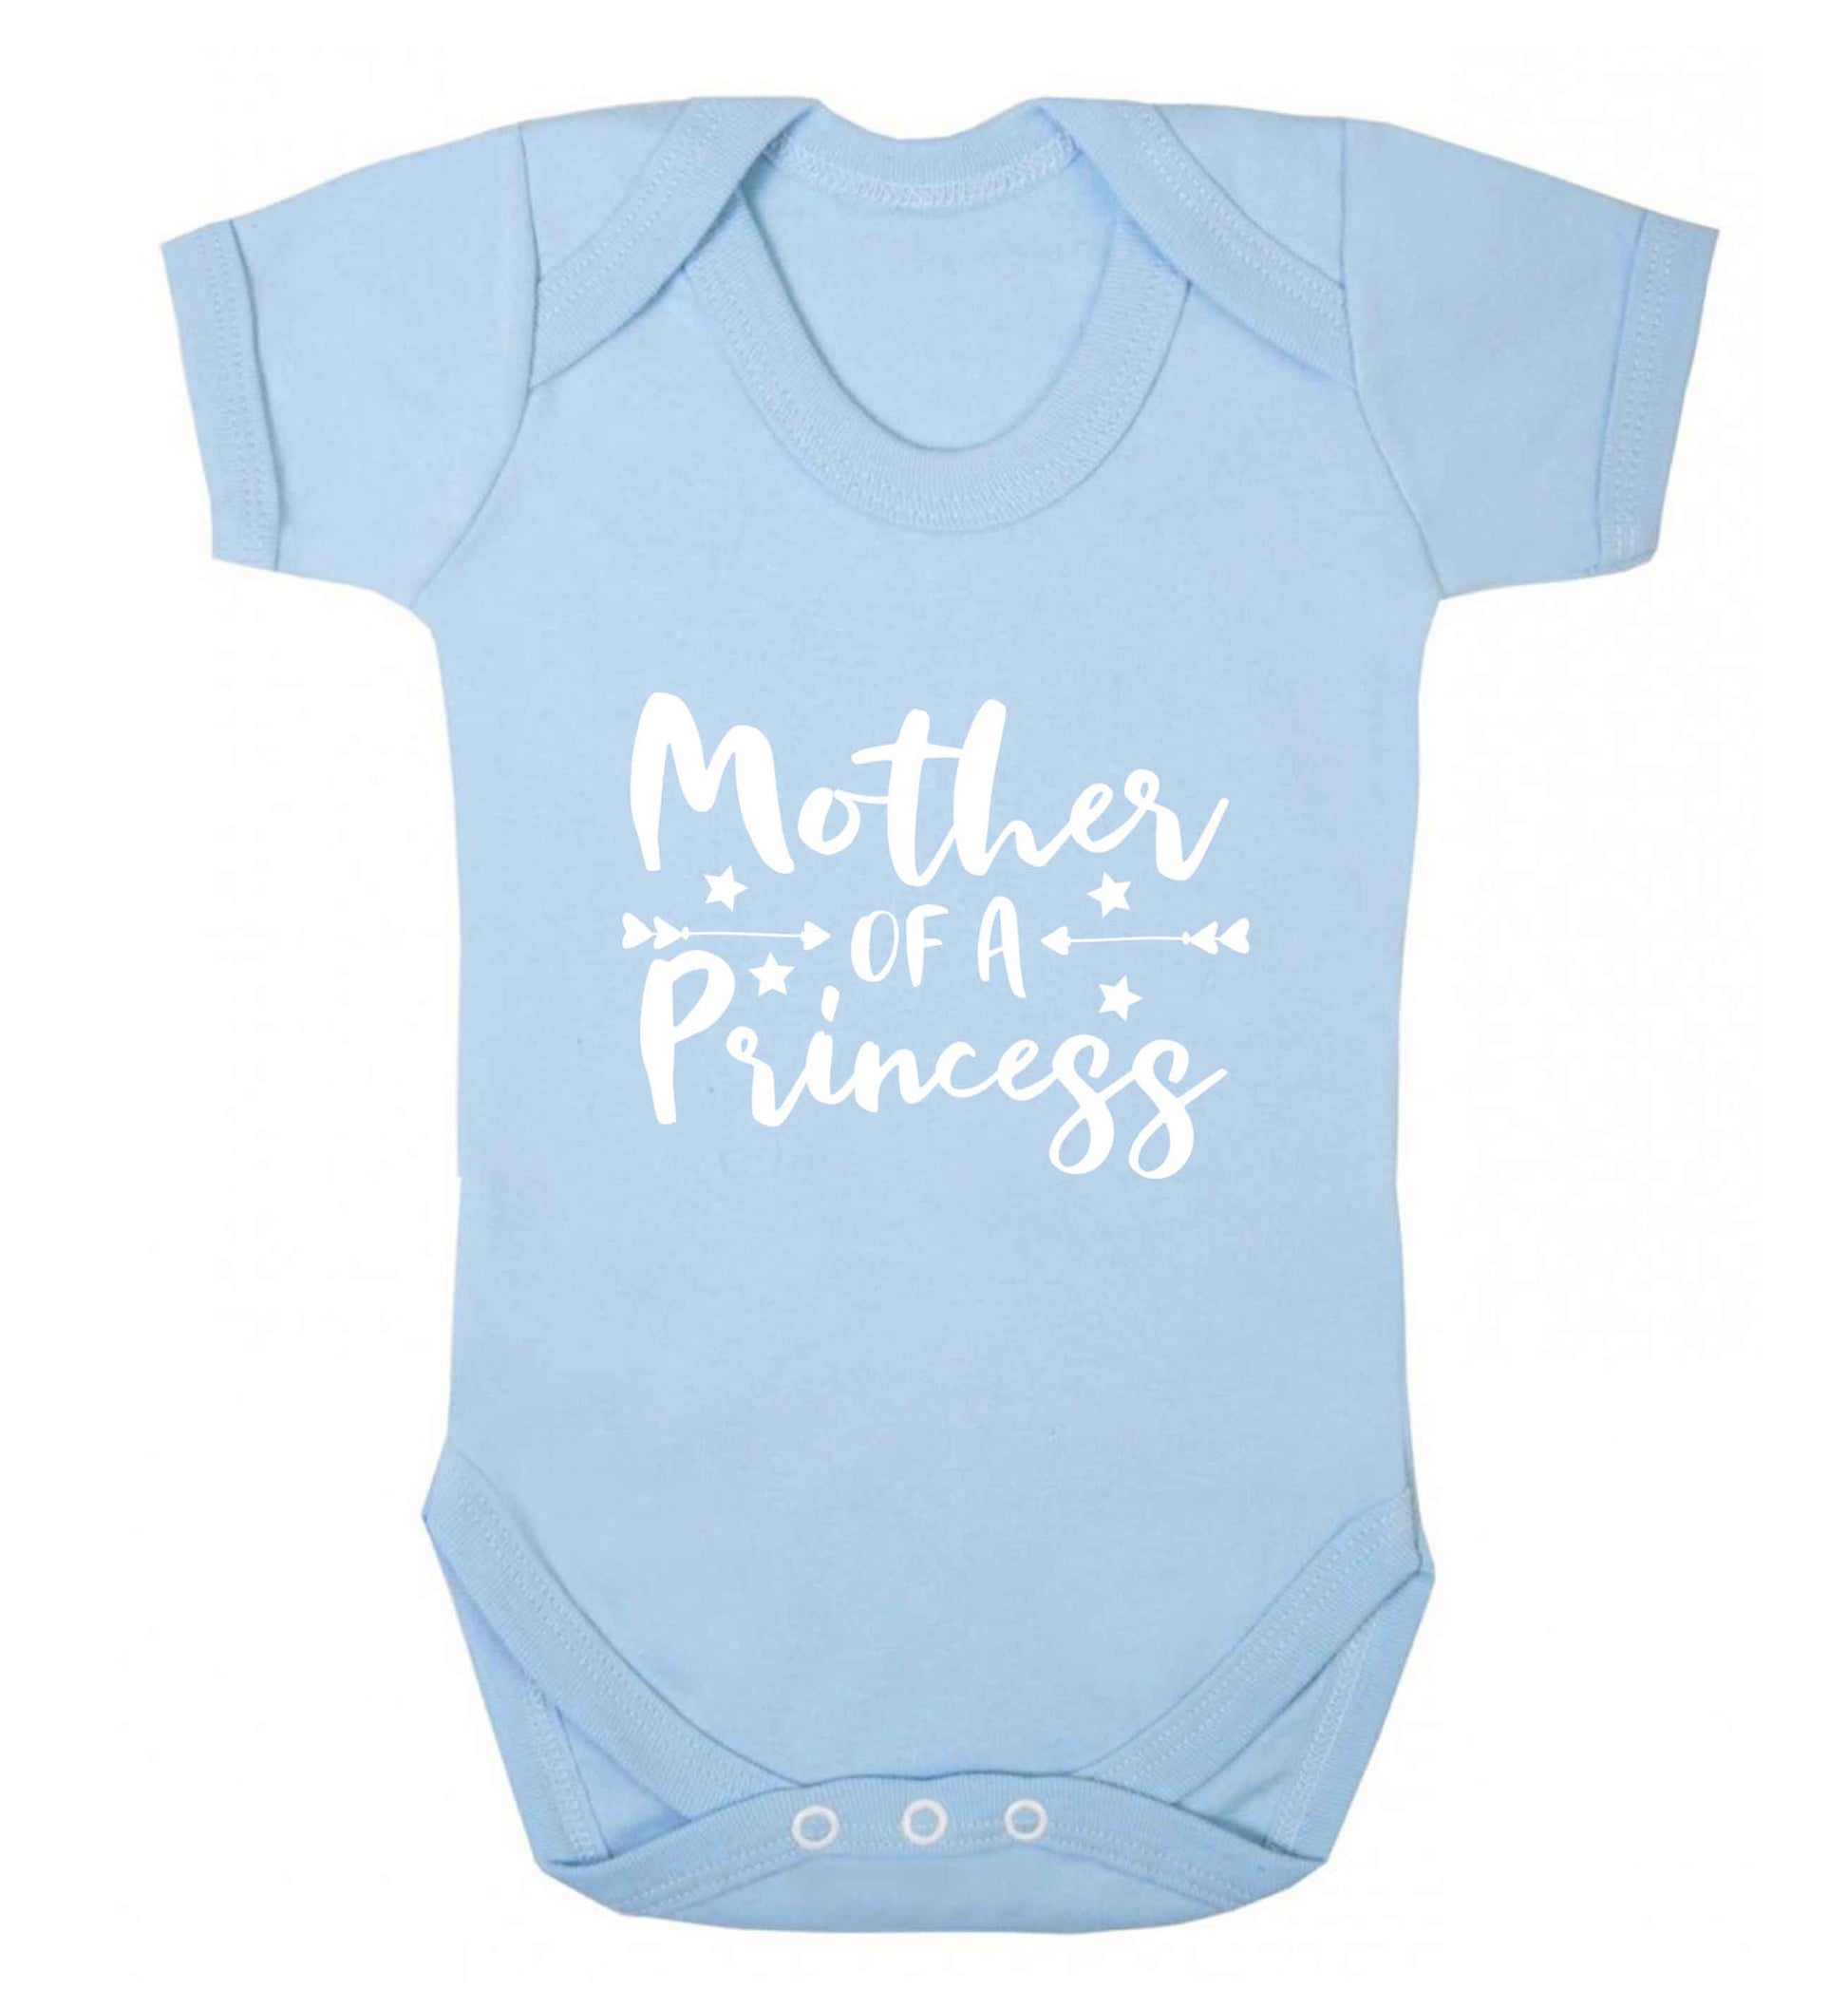 Mother of a princess baby vest pale blue 18-24 months